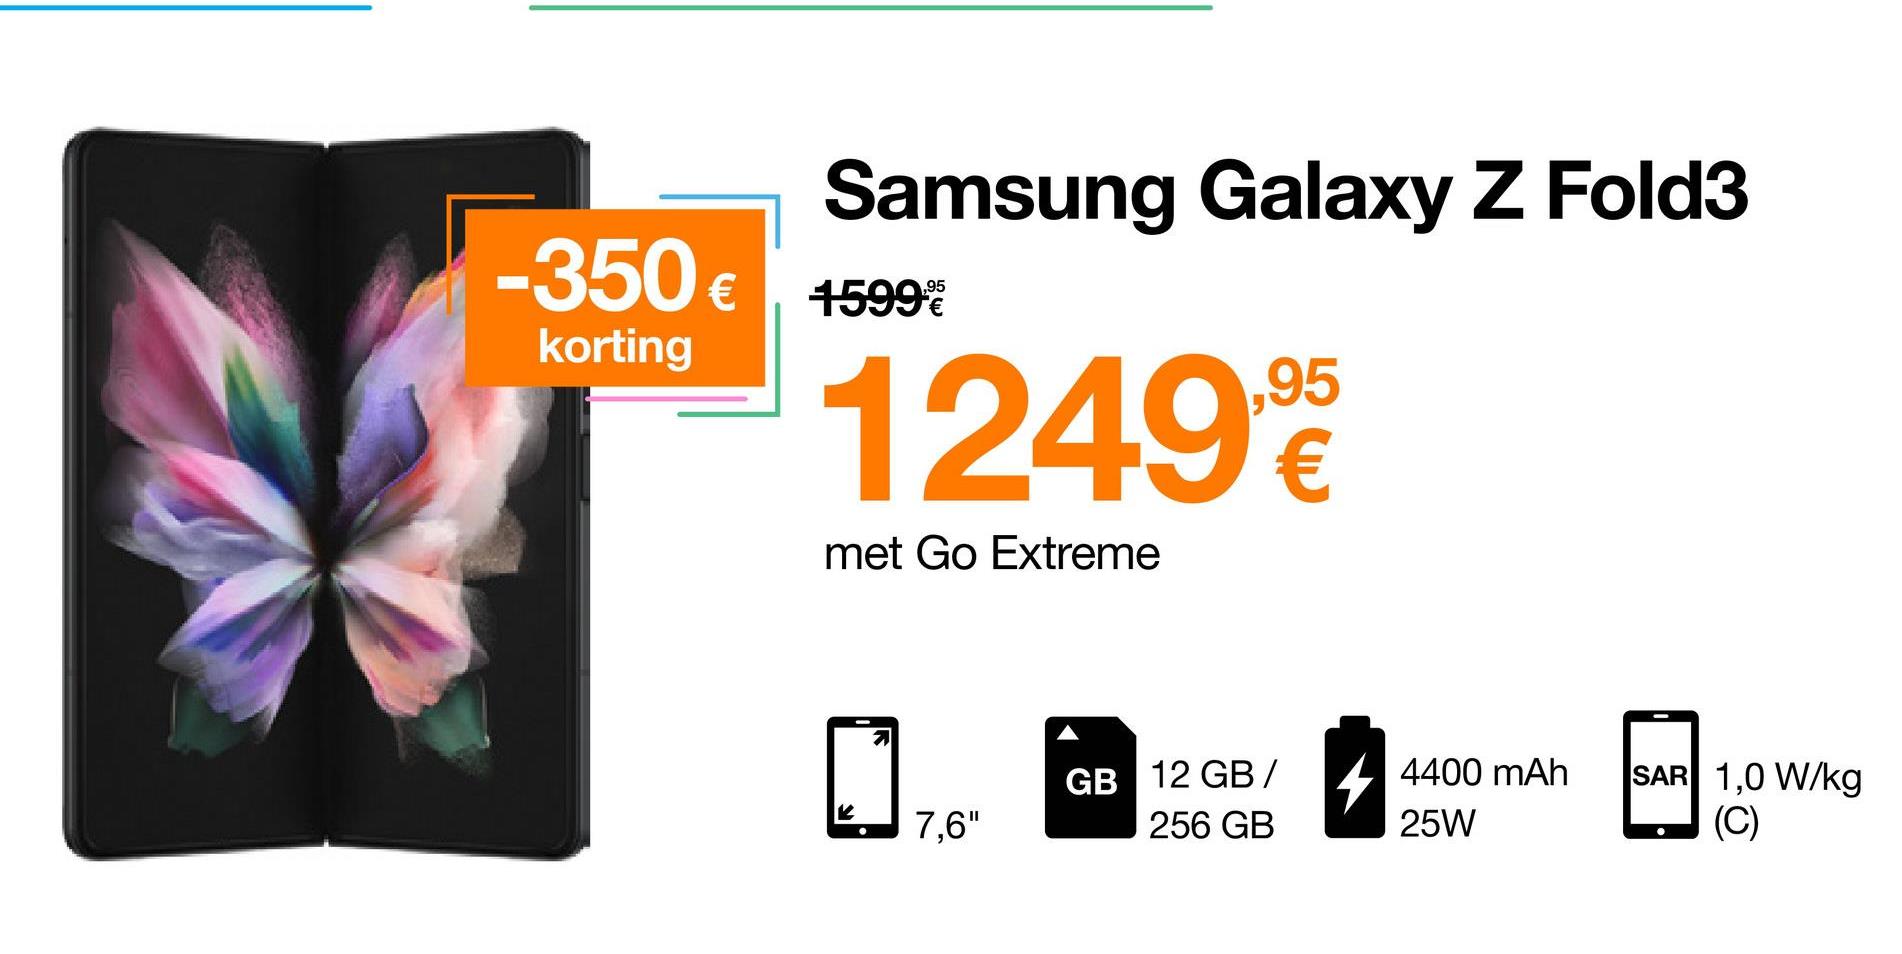 Samsung Galaxy Z Fold3
1249,9
met Go Extreme
GB 12 GB/
7,6"
256 GB
-350 € 4599%
korting
4400 mAh
25W
SAR 1,0 W/kg
(C)